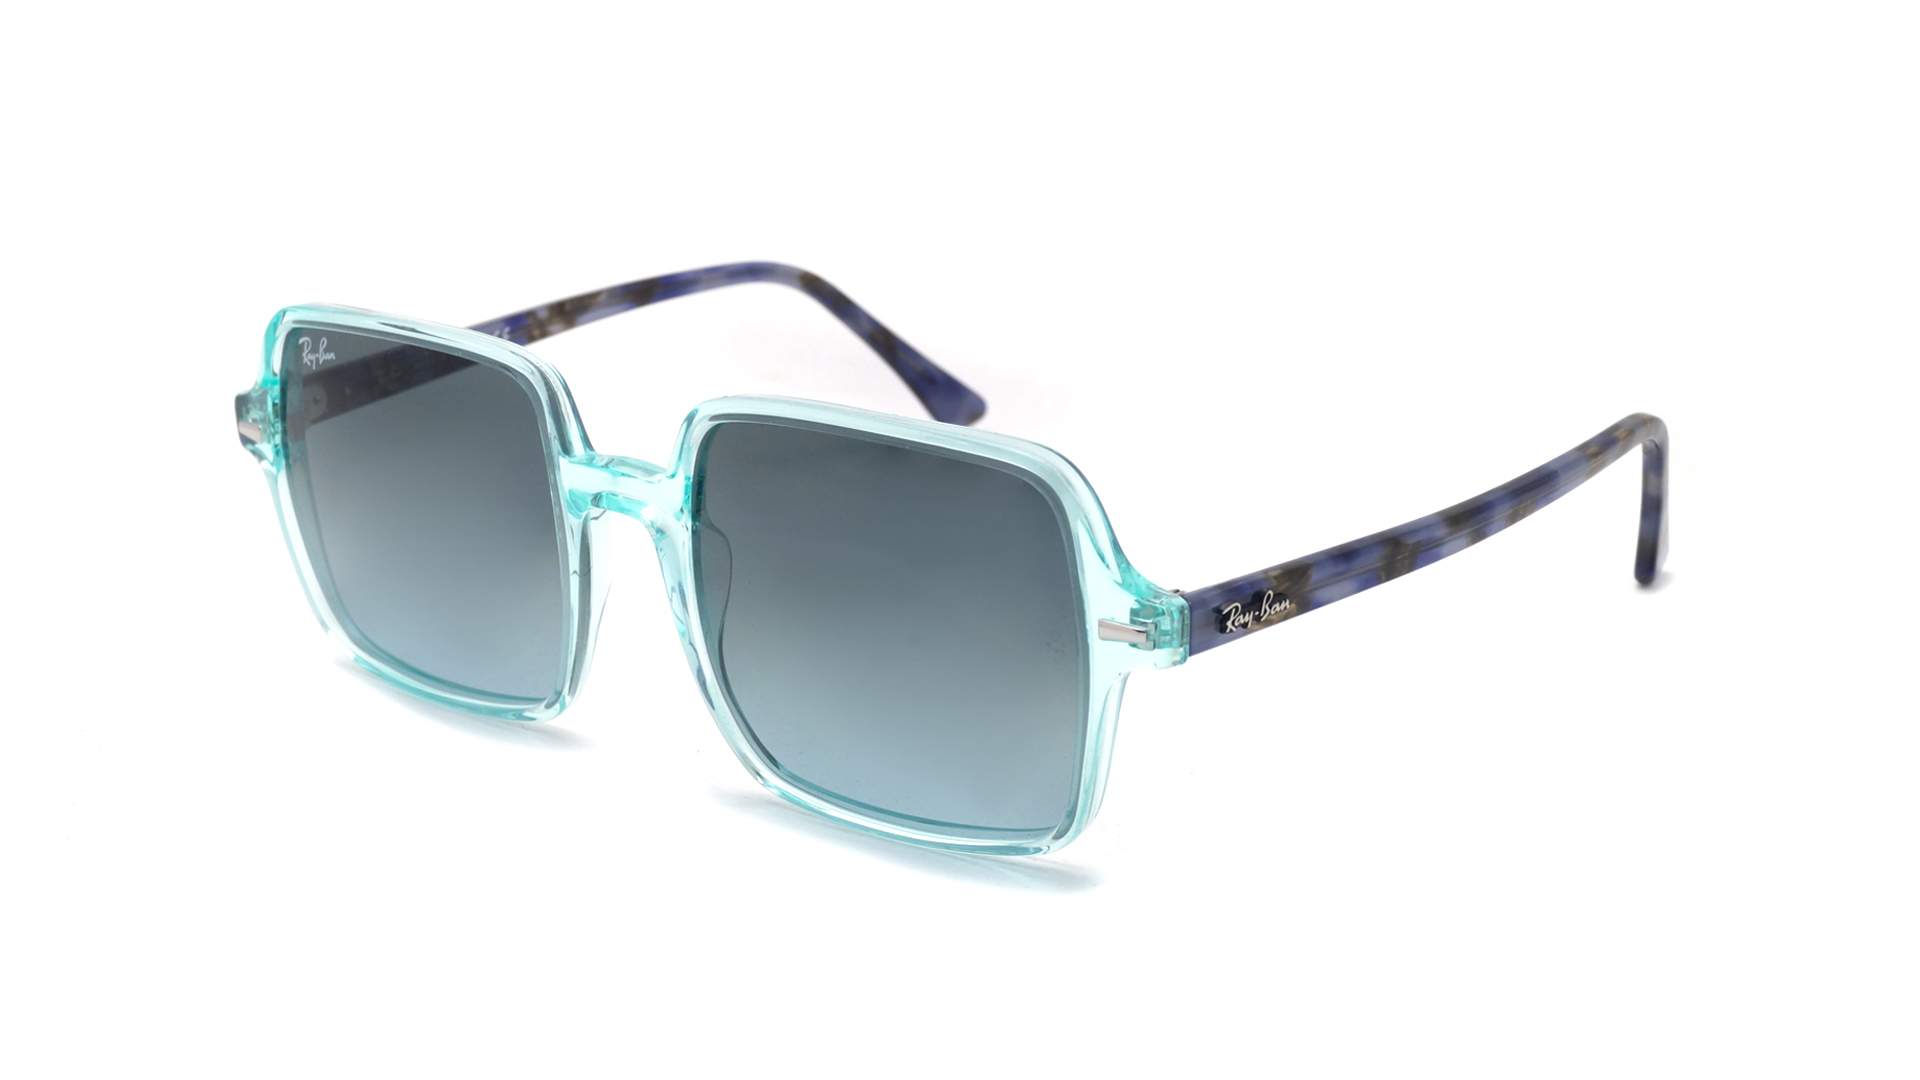 sunglasses ray ban blue